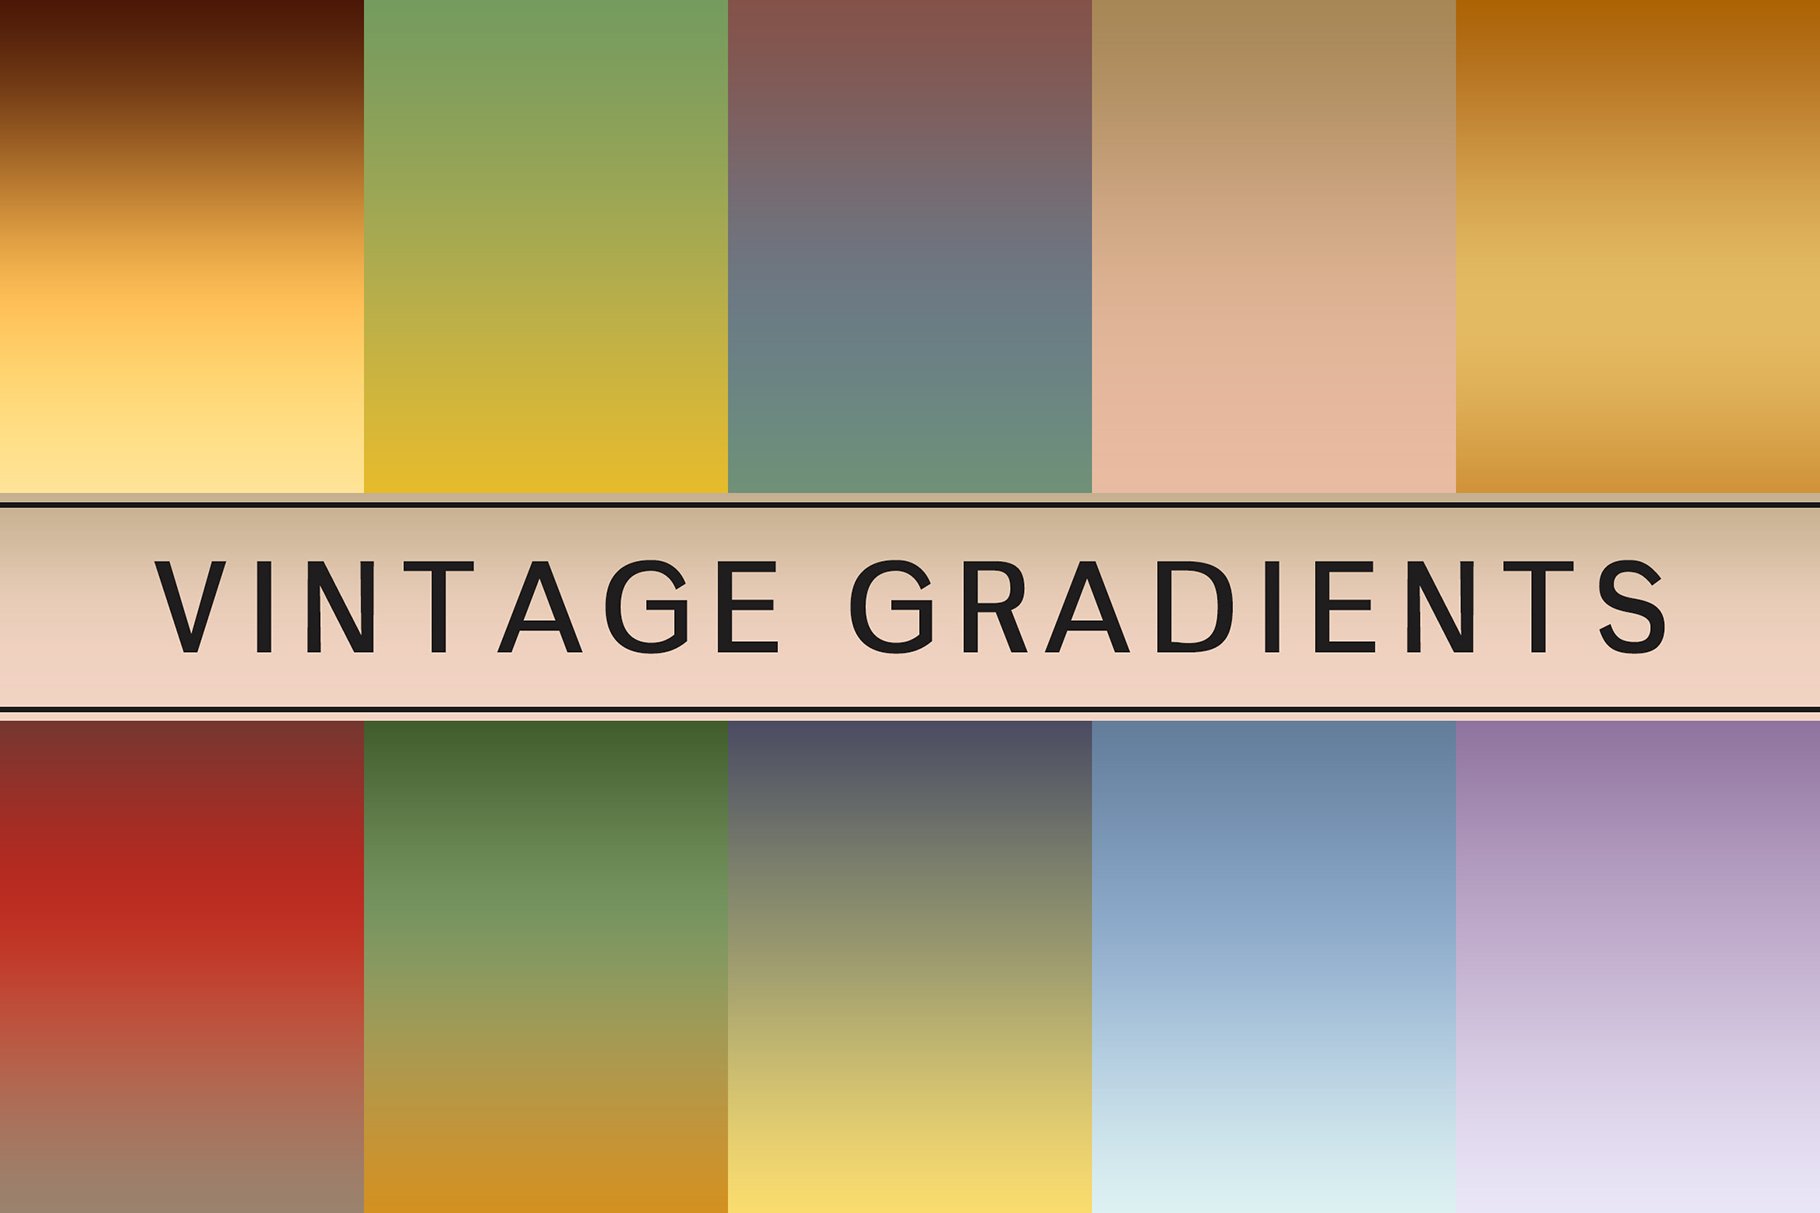 Vintage Gradients cover image.